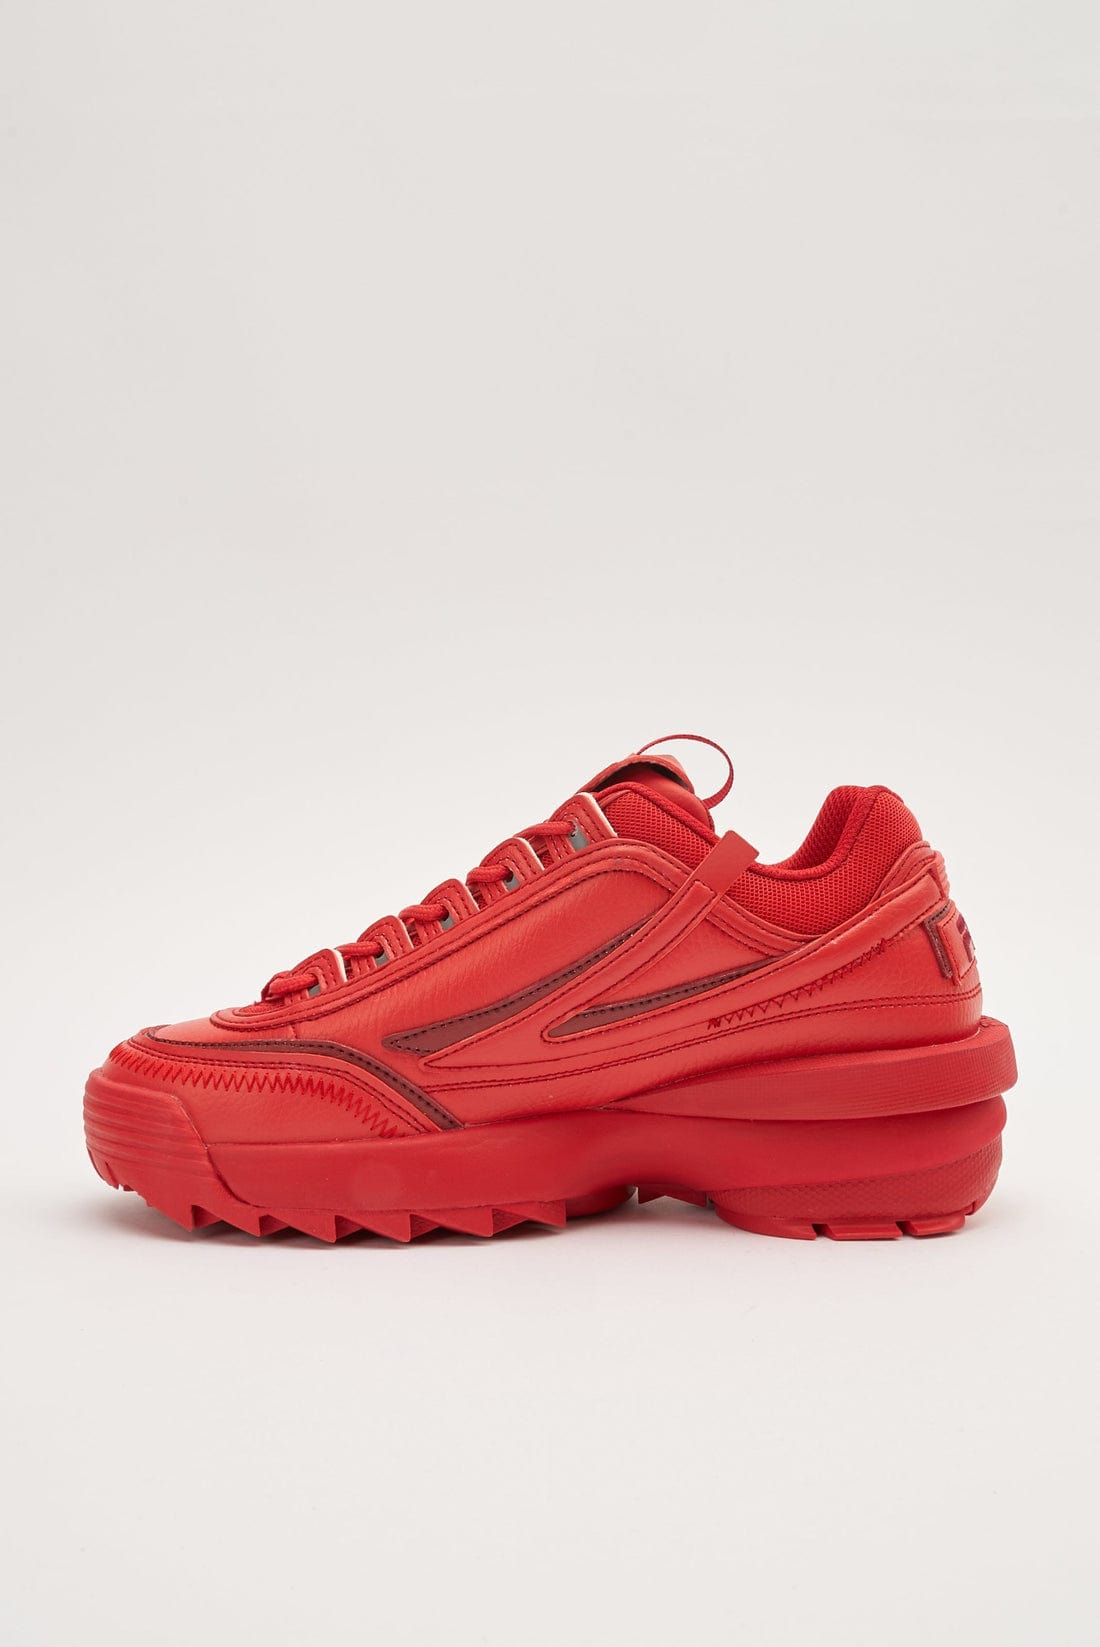 Kent brud bredde Fila Ladies Sneakers Disruptor 2 Red for Sale ✔️ Lowest Price Guaranteed